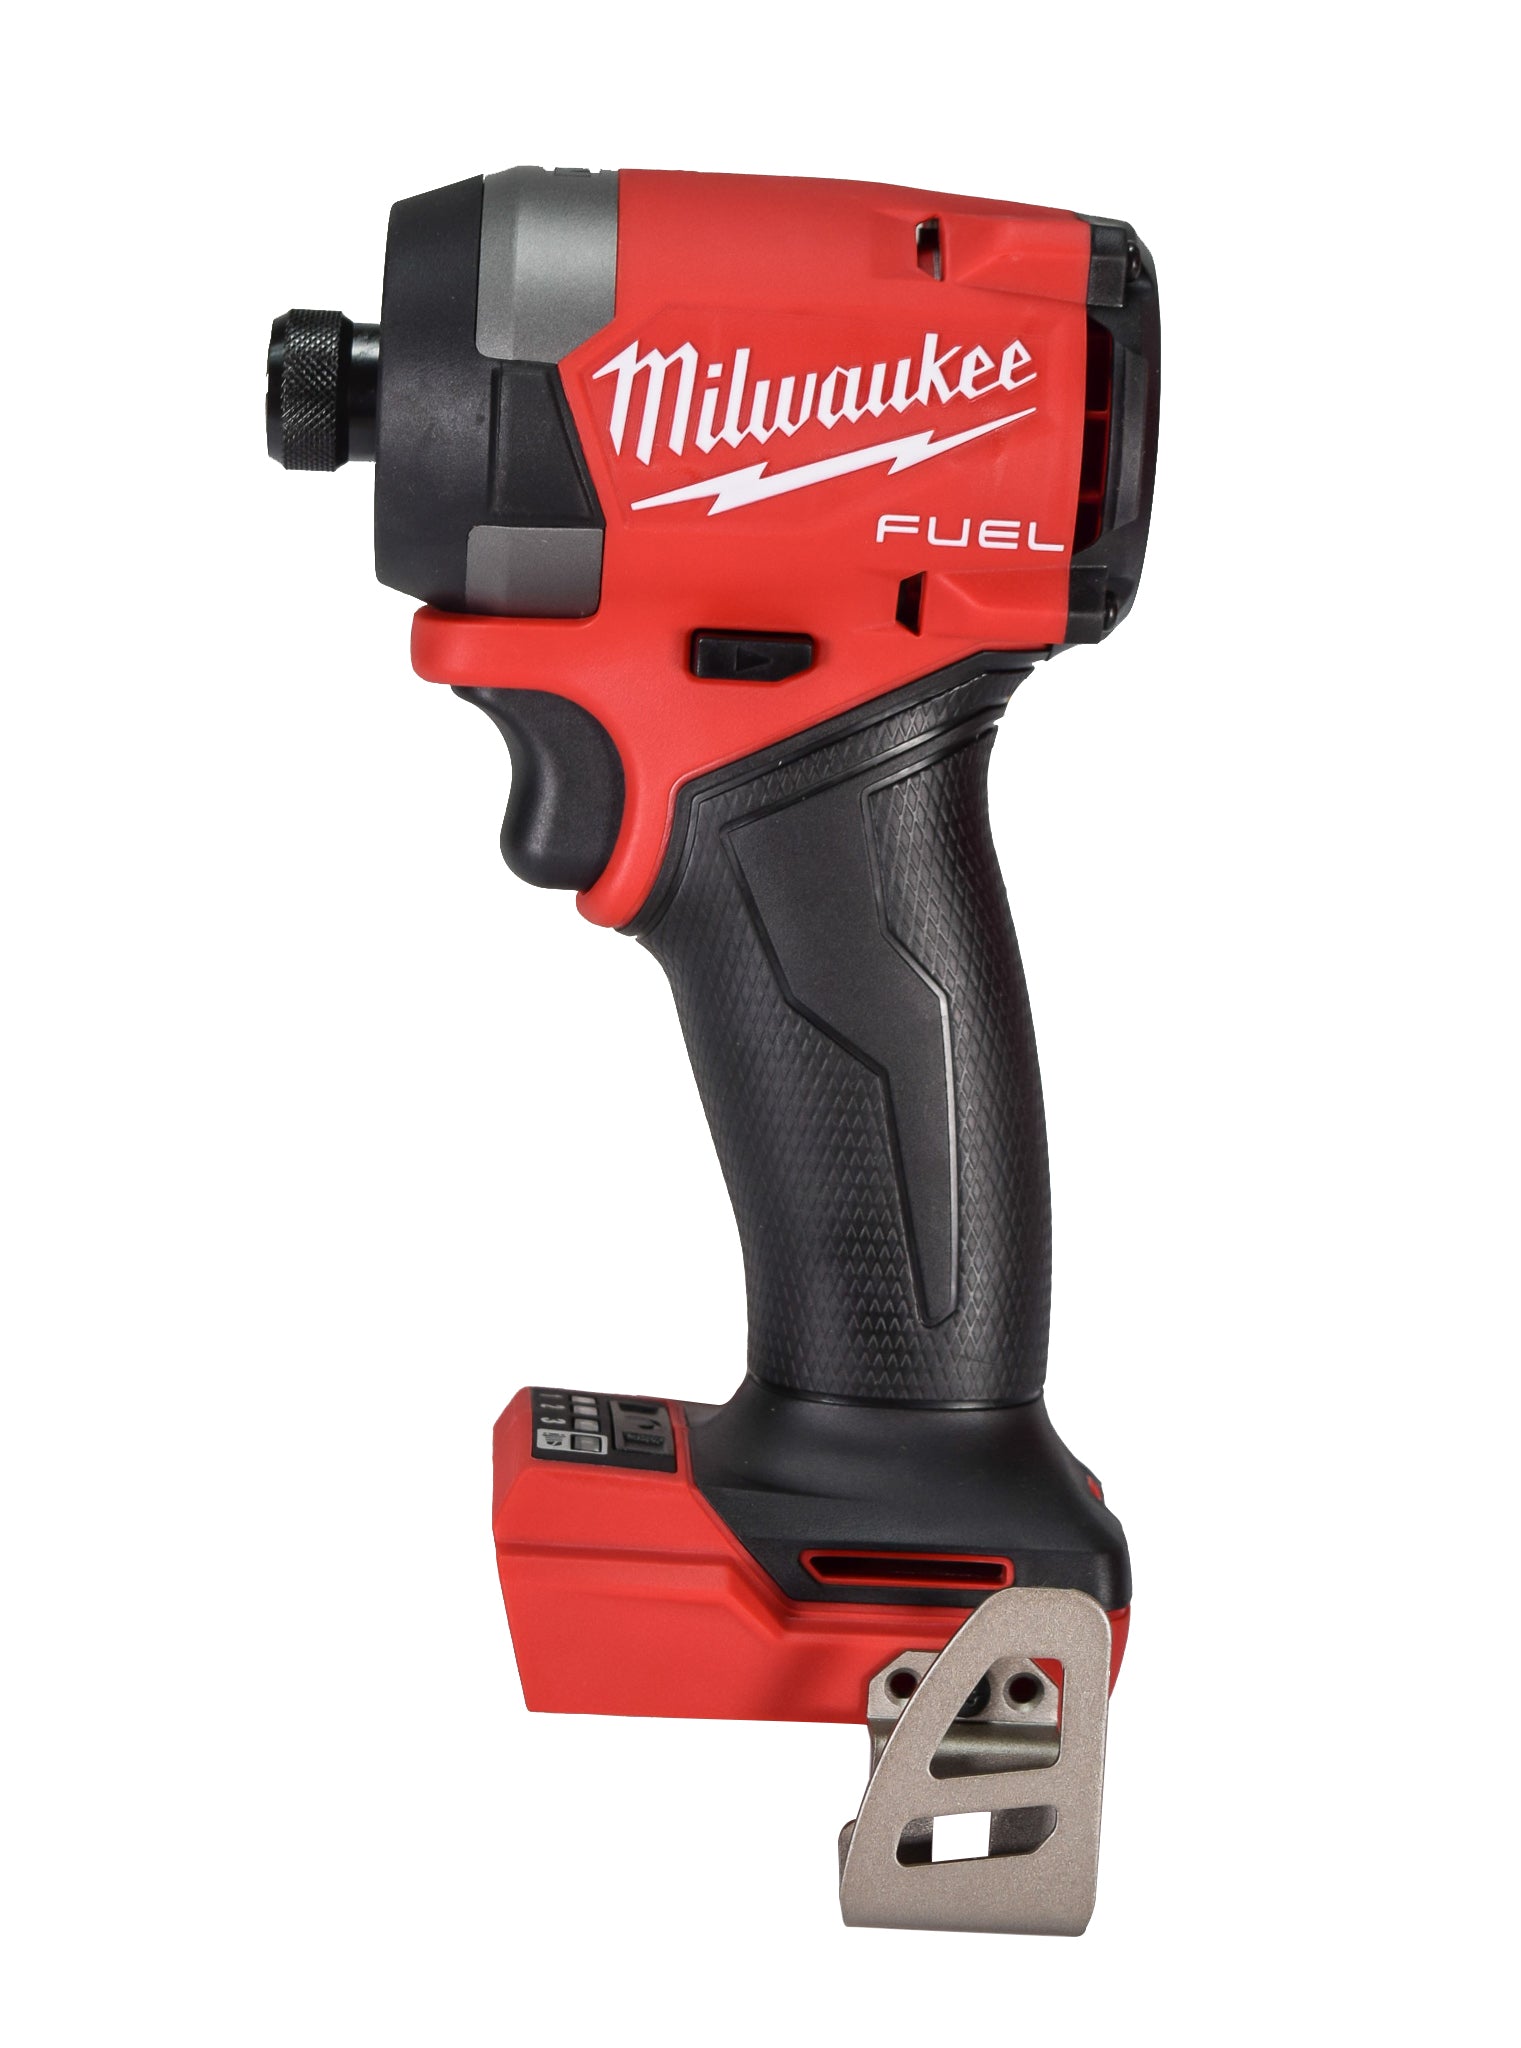 Milwaukee 3697-22 18V Cordless Hammer Drill and Impact Driver 2-Tool Combo Kit